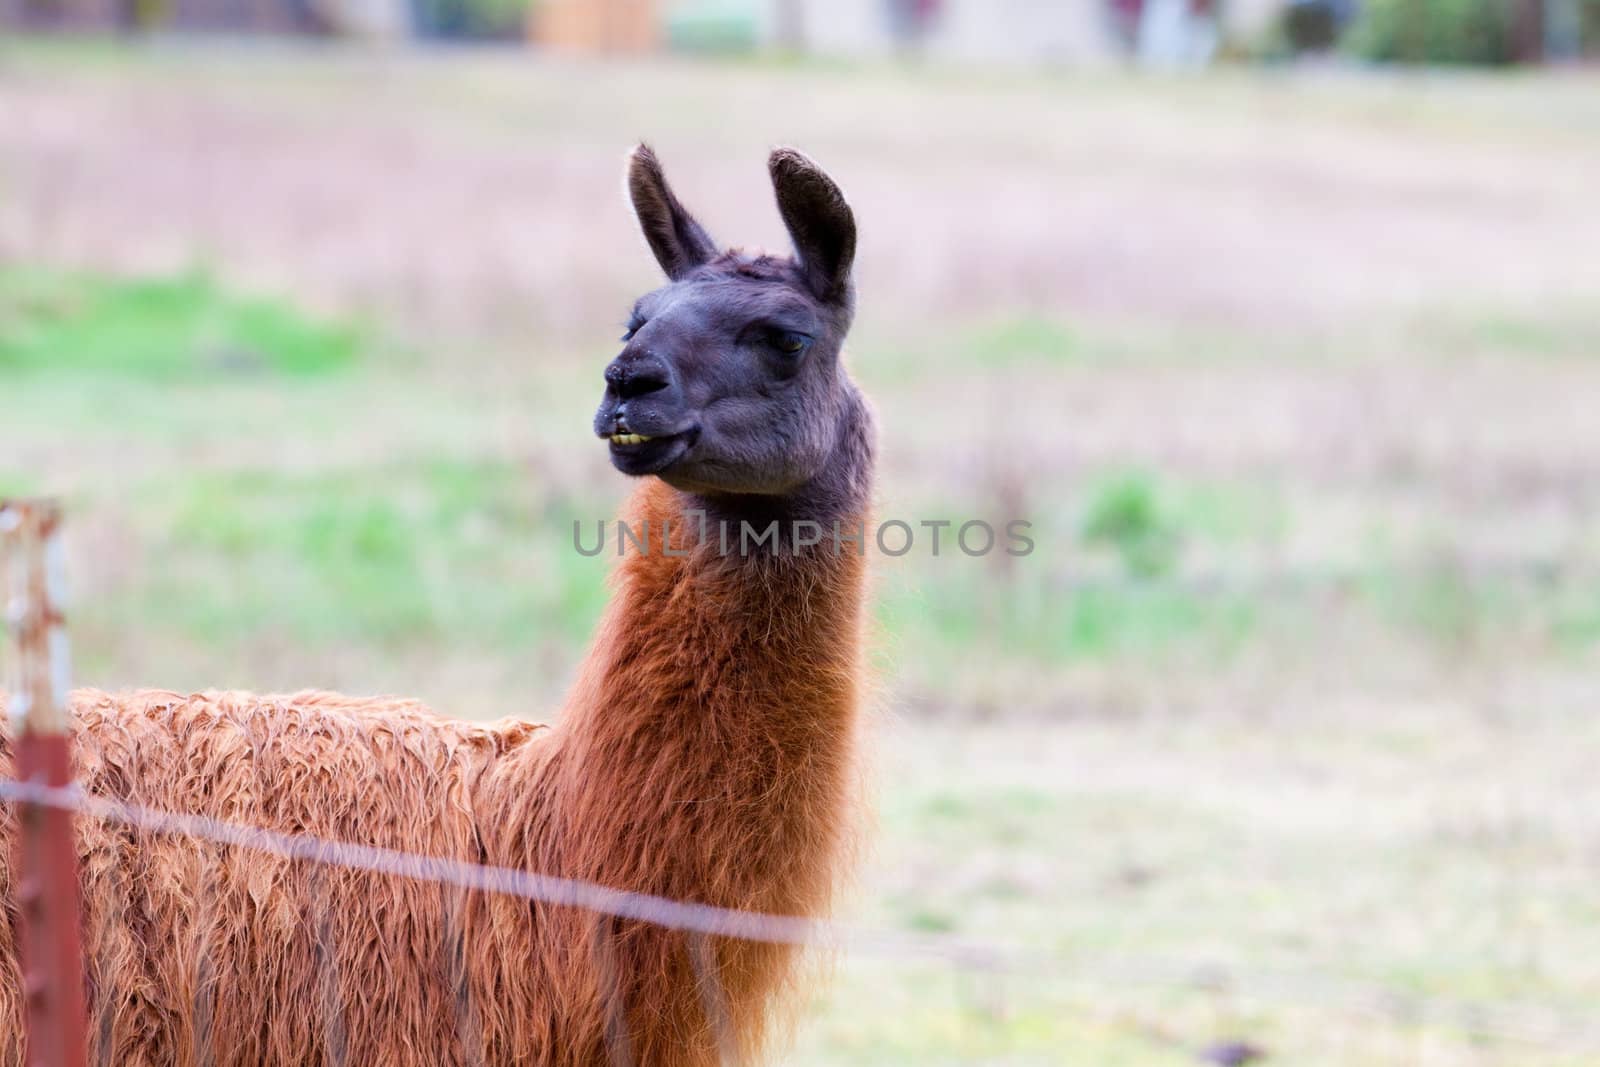 Llama in Field by joshuaraineyphotography